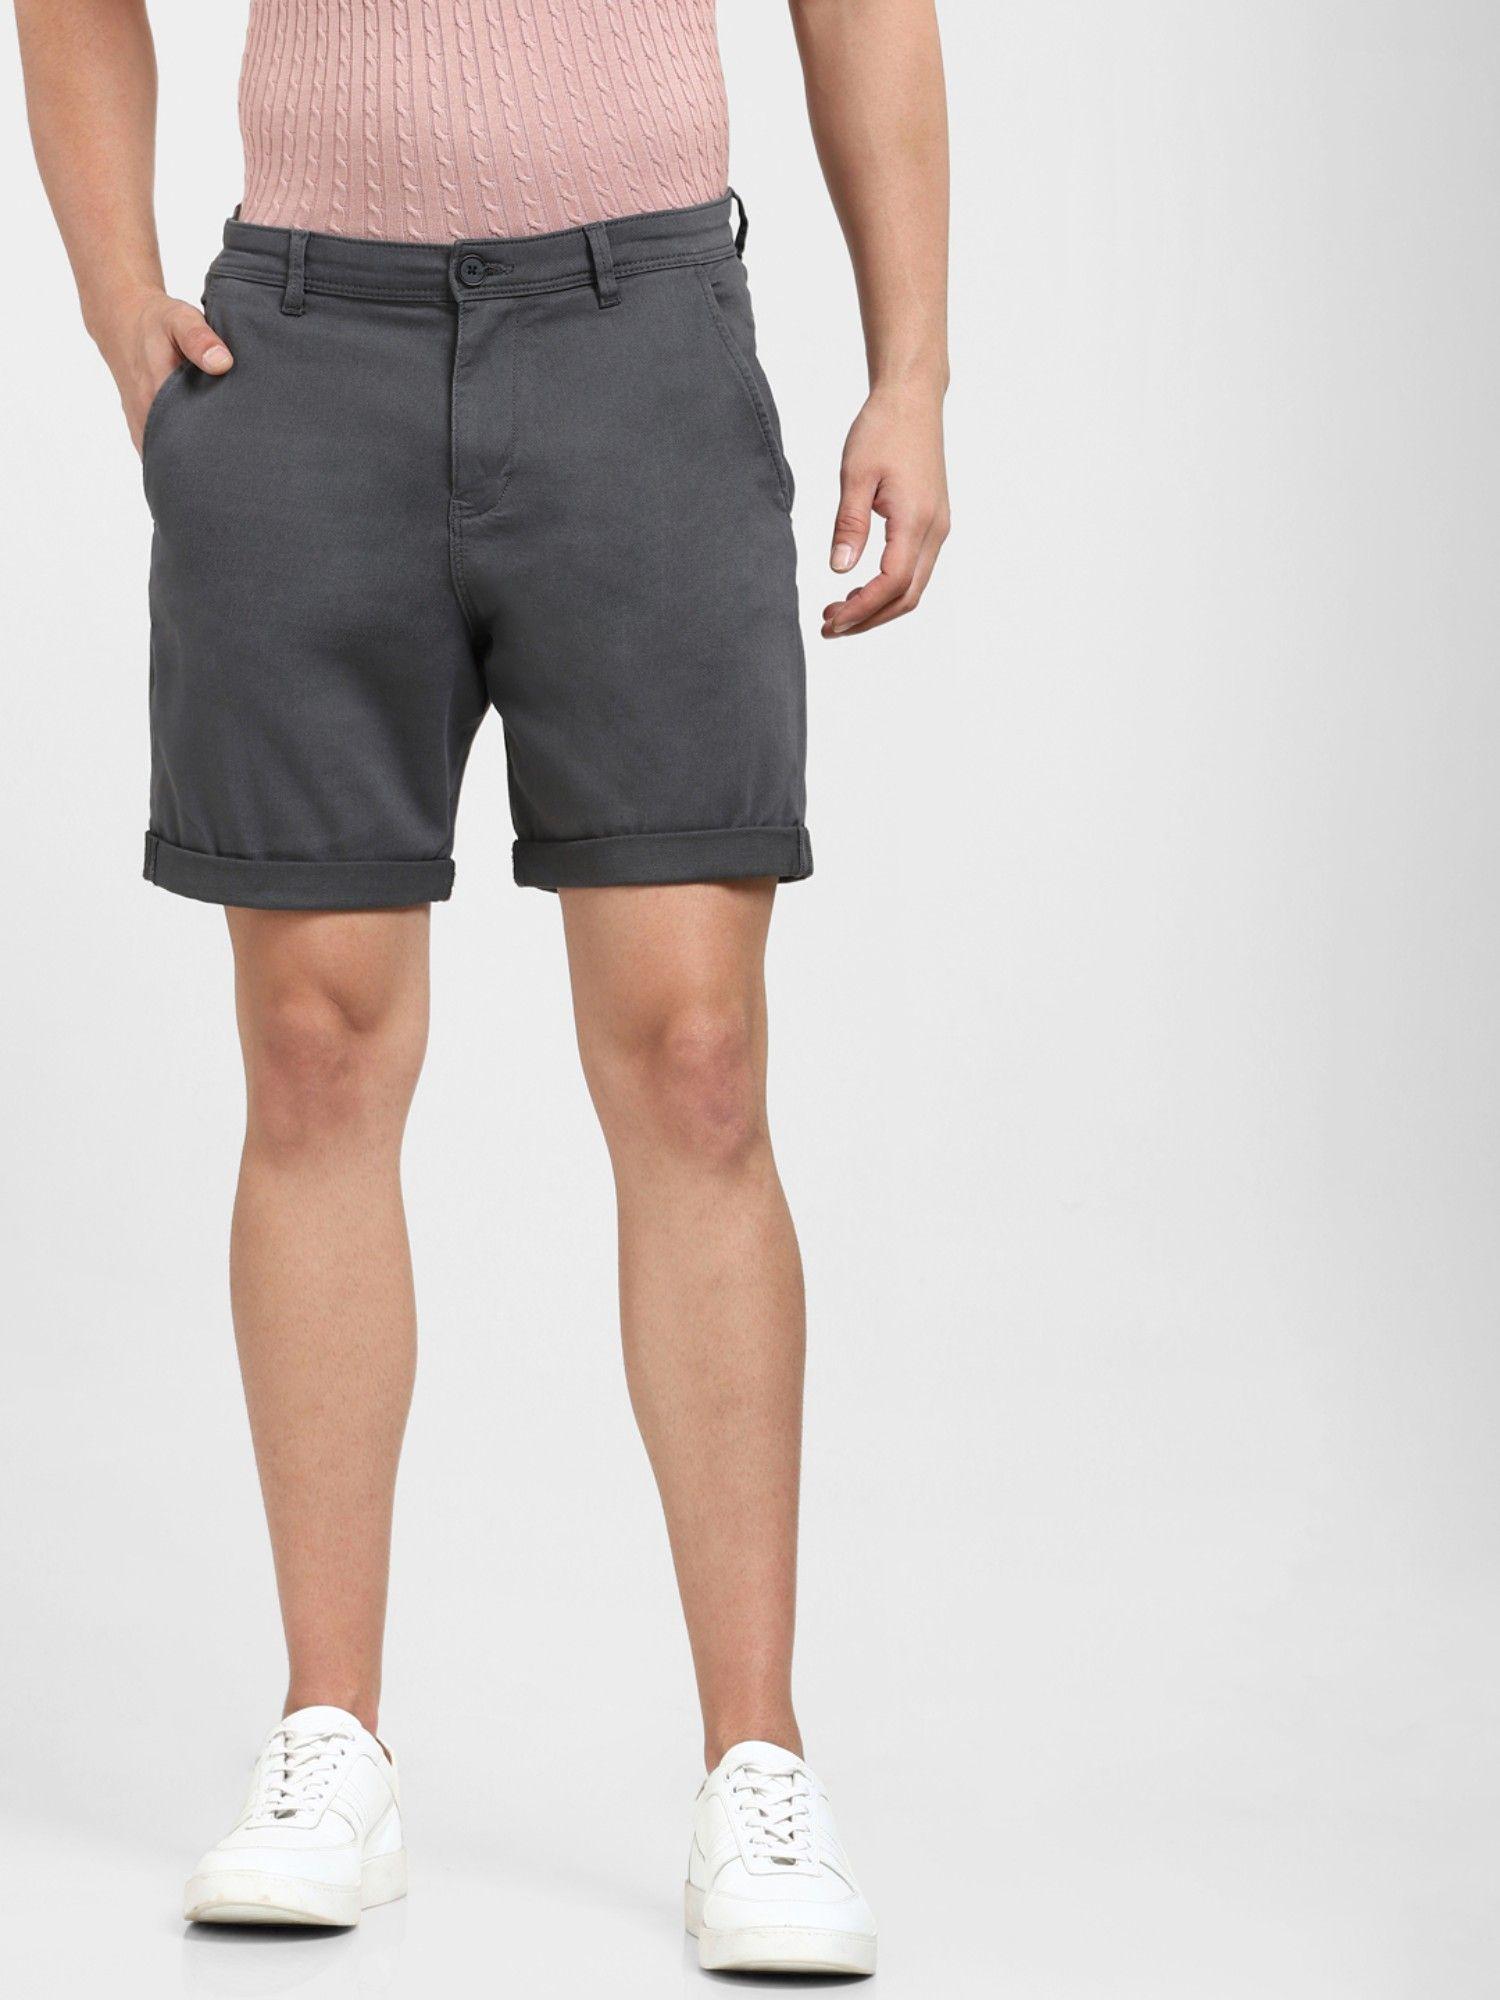 grey mid rise shorts